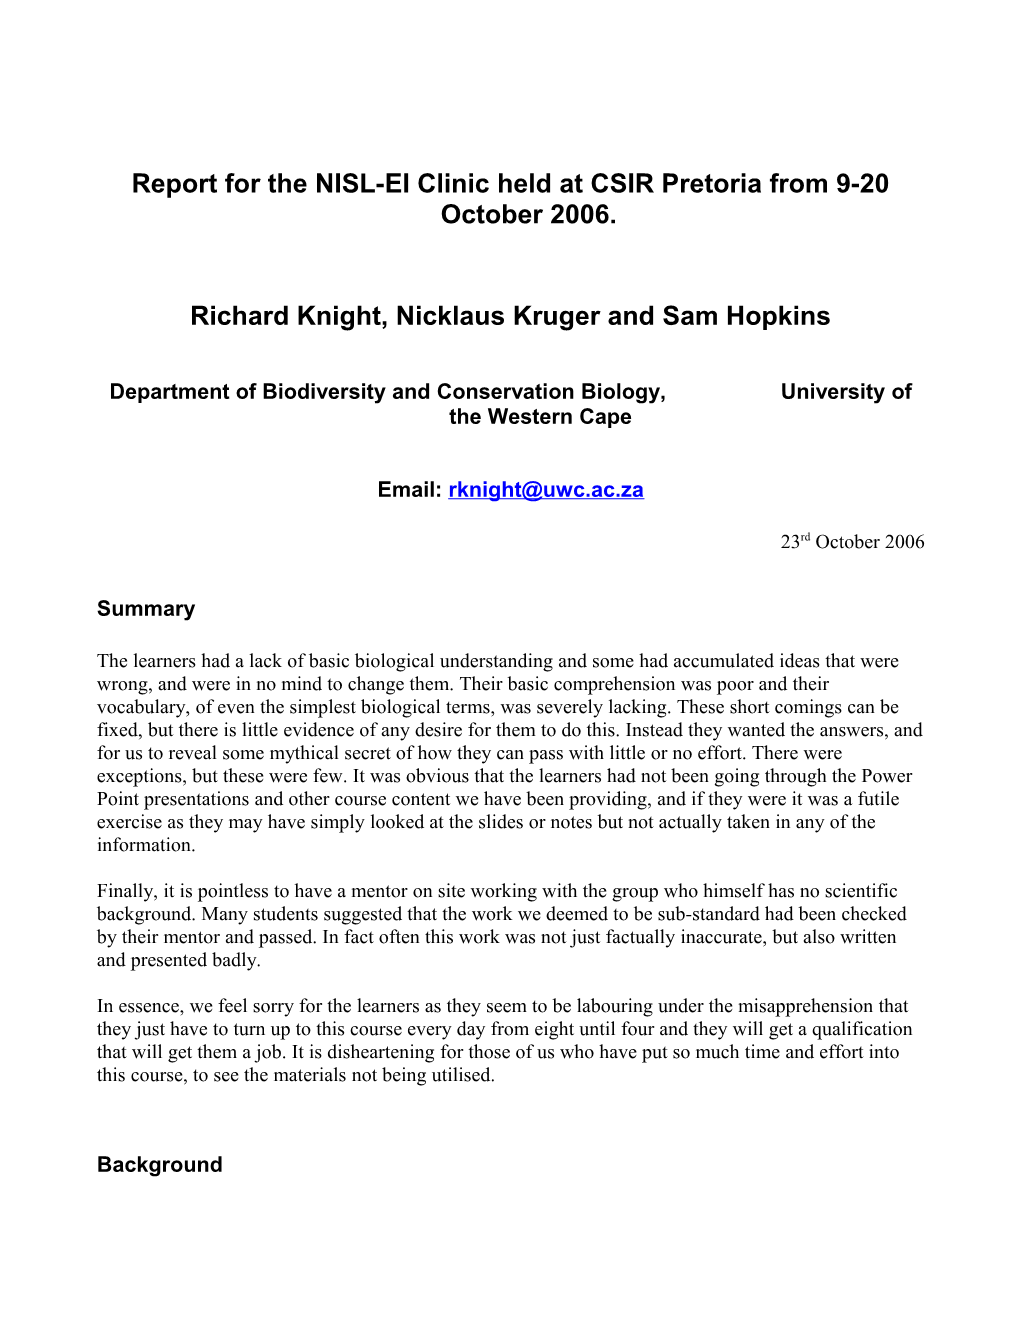 Richard Knight, Nicklaus Kruger and Sam Hopkins